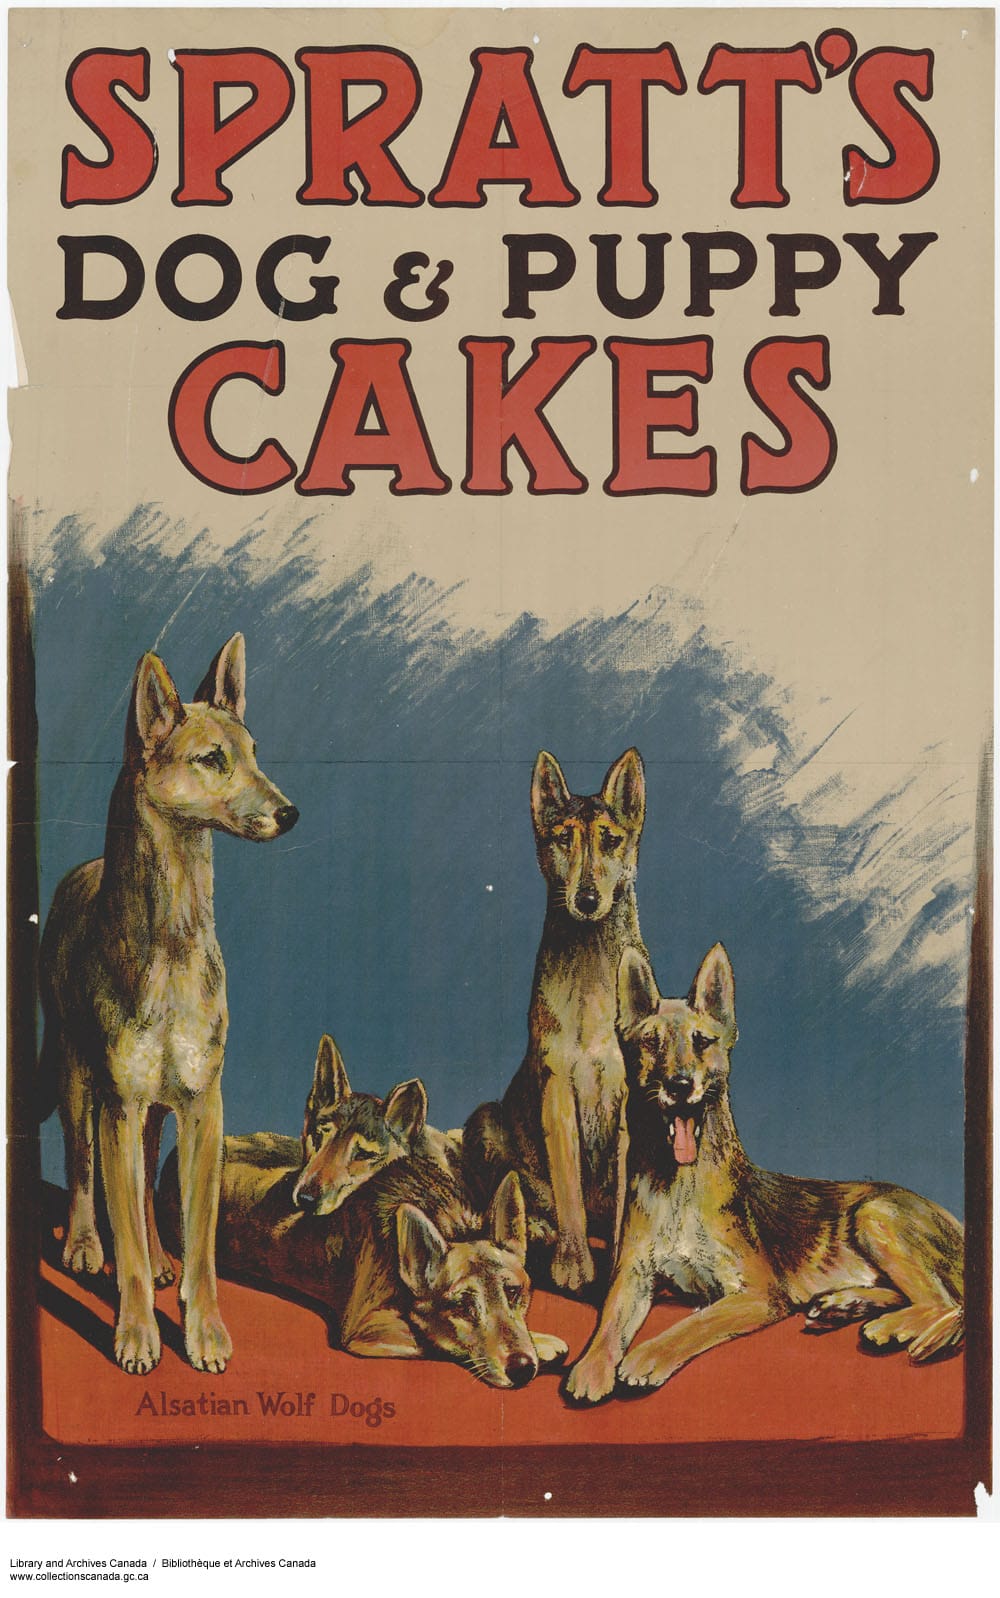 Dog & Puppy Cakes